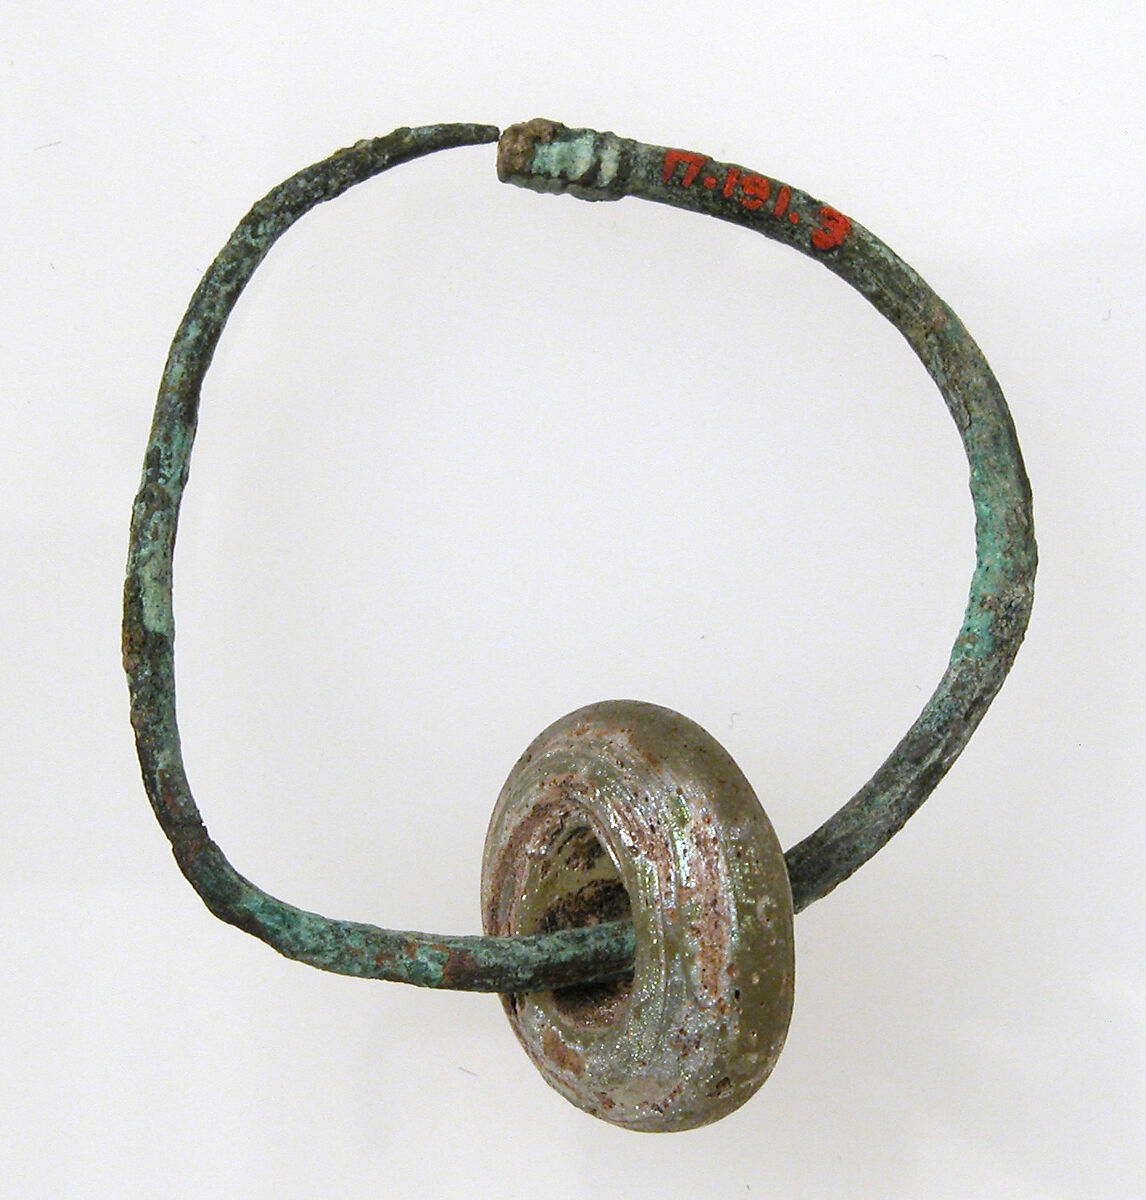 Earring, Copper alloy, glass bead, Late Roman 